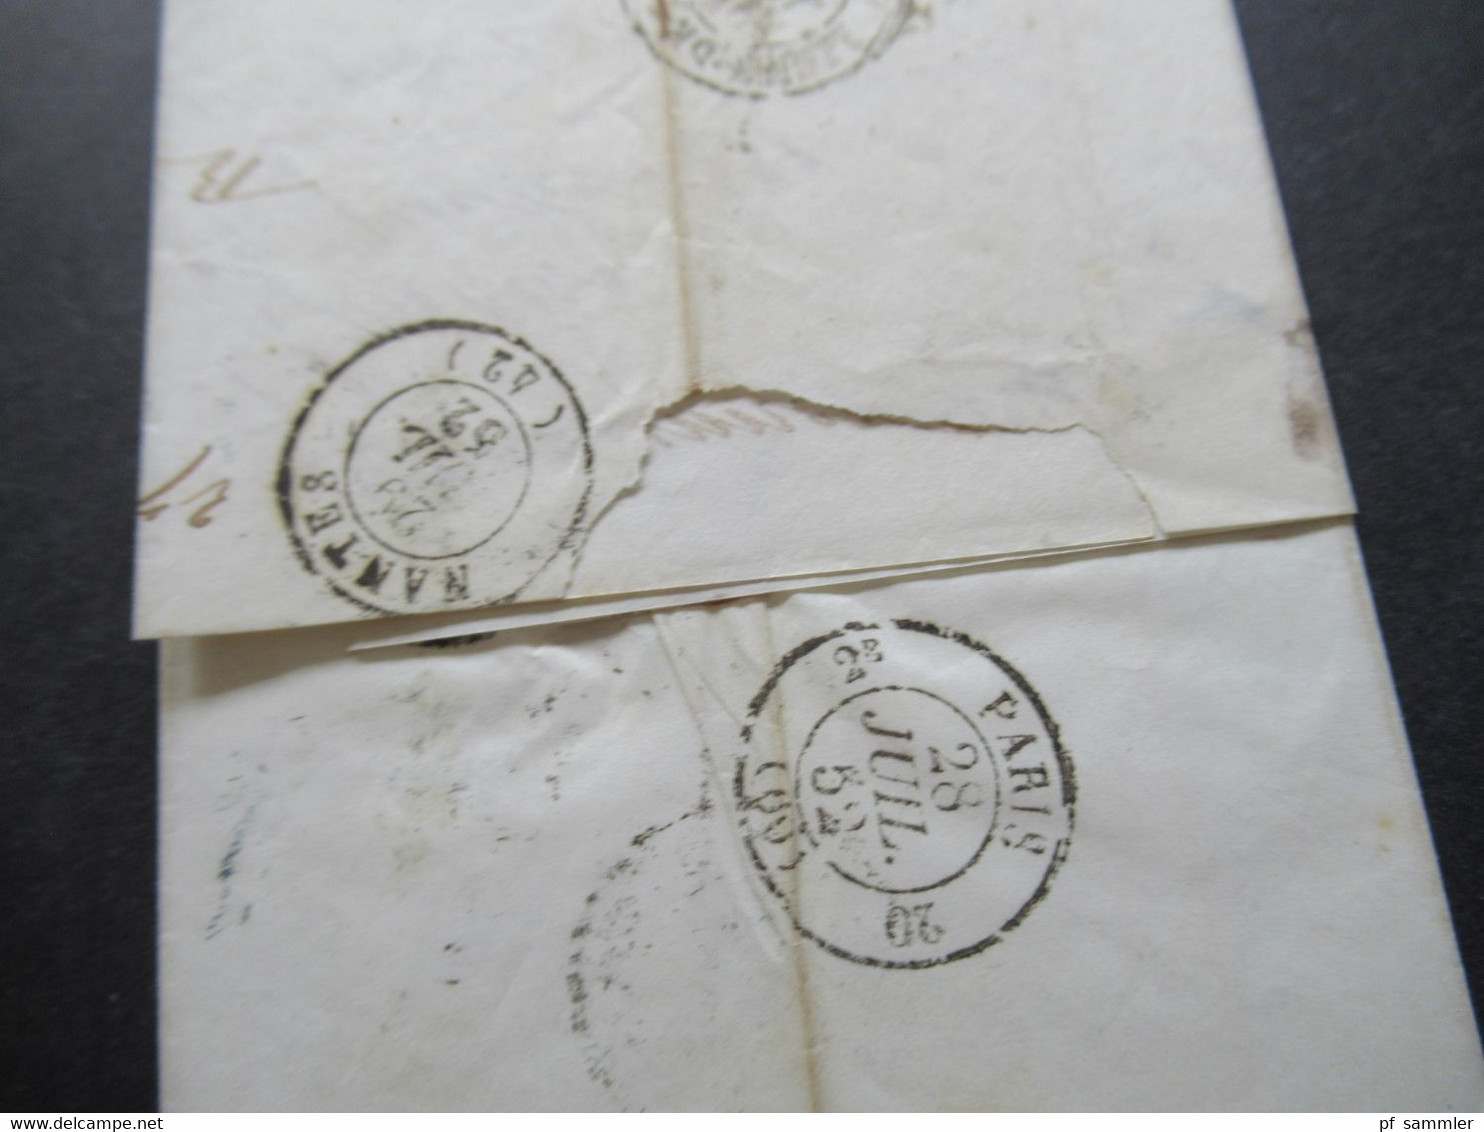 GB London 1852 Stempel B S Mit Krone Und Blauer L1 Oxford / Angl AM 1 Calais 2 über Paris Nach Nantes - Covers & Documents